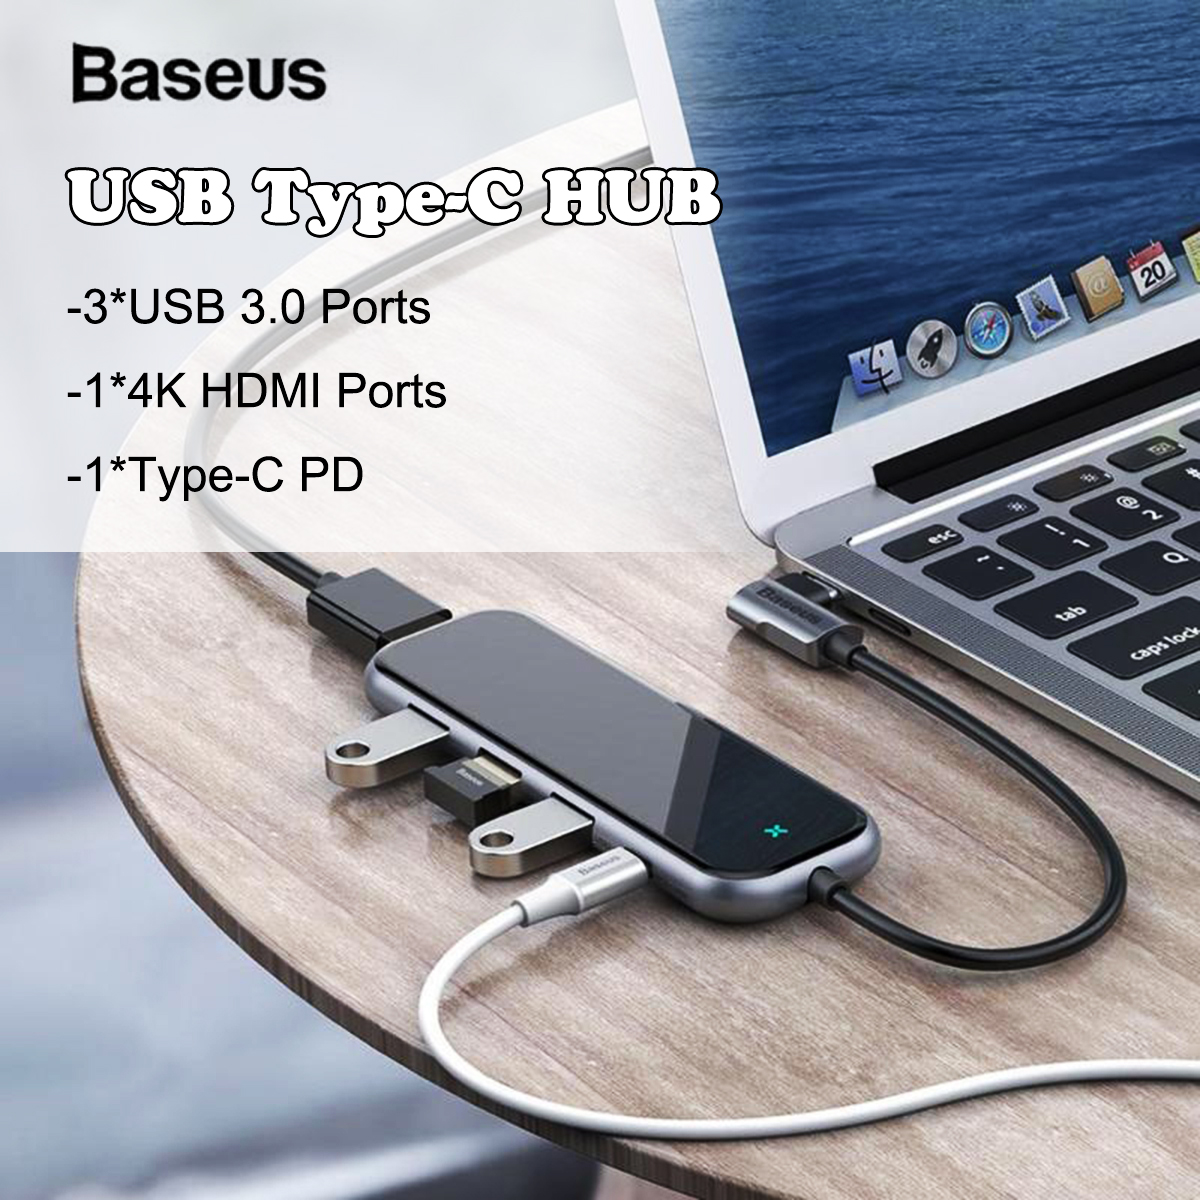 Baseus-USB-C-Type-C-Hub-Adapter-With-3--USB-30-PortsType-C-PD-Charging-Port4K-HD-Display-Interface-1561498-1